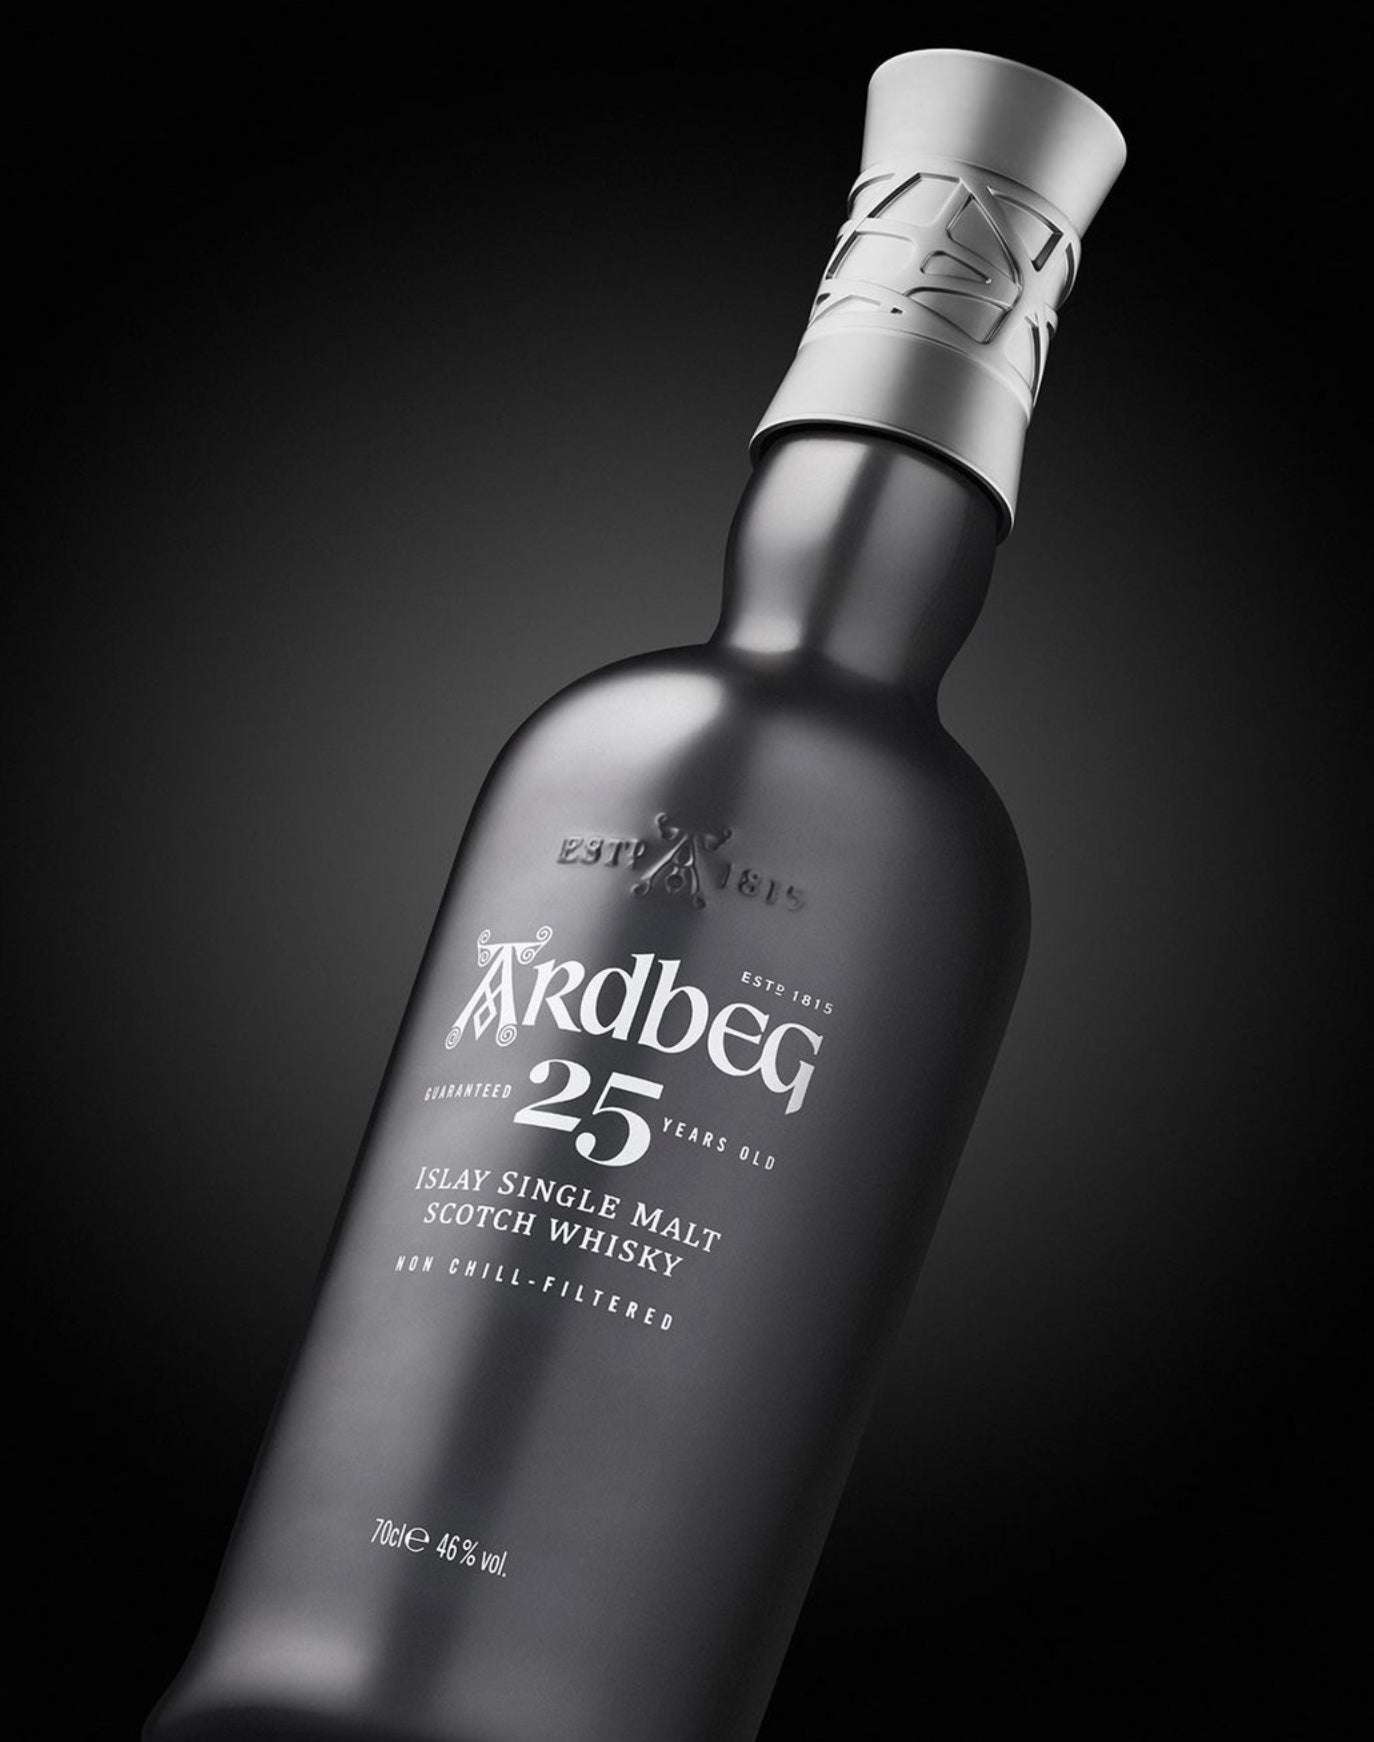 Whisky Ardbeg 25 Year Old - Single Malt Scotch Whisky